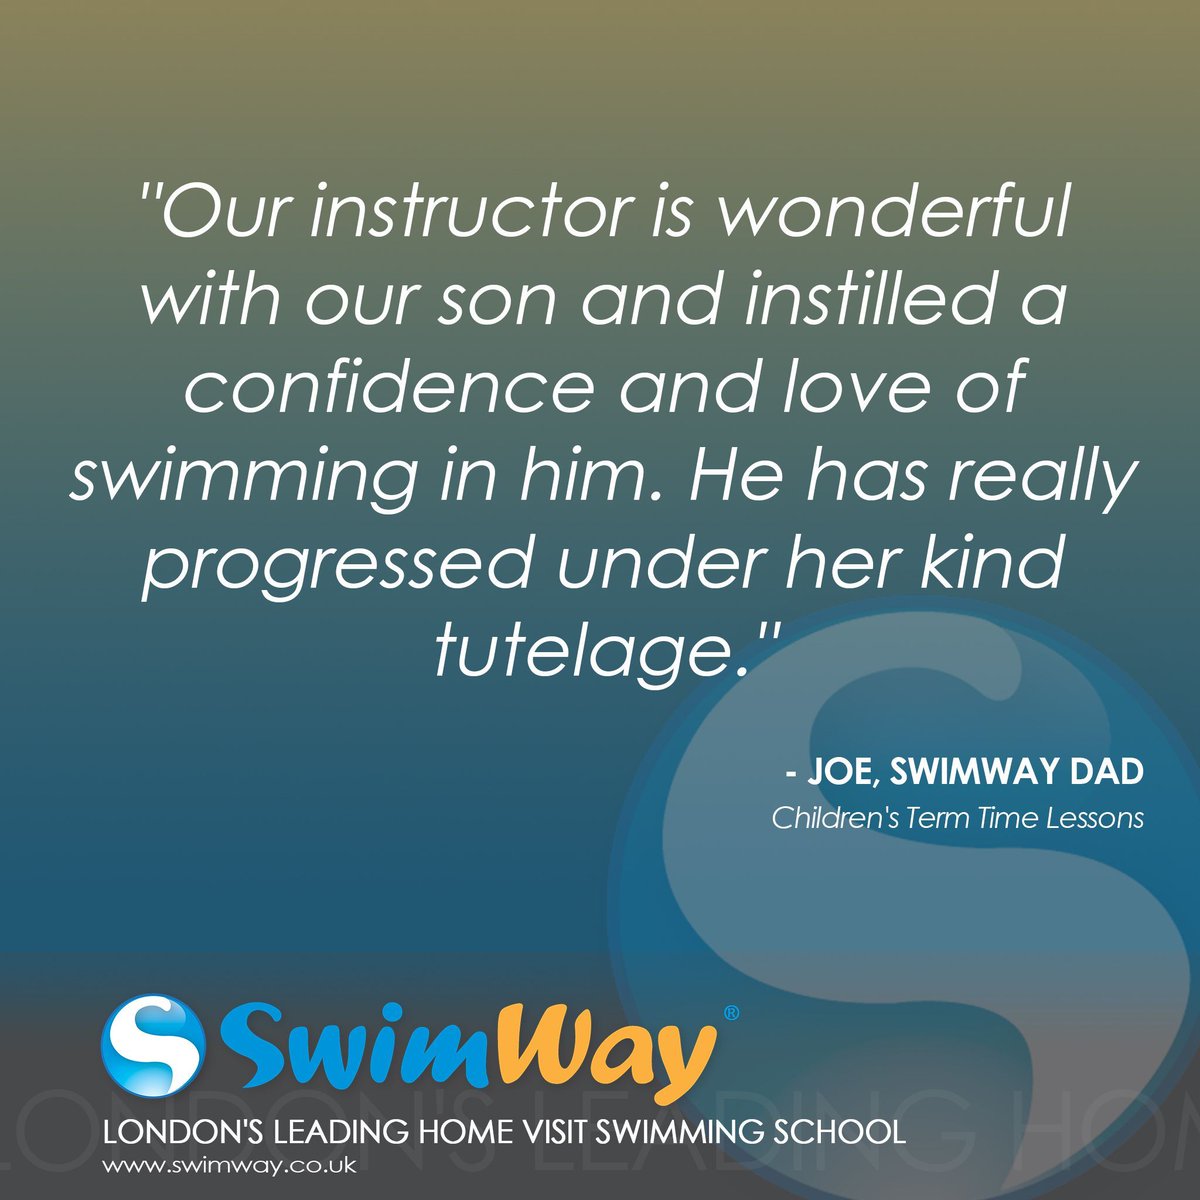 🌟 Another heartwarming testimonial from a Swimway Dad, Joe! 🏊‍♂️🤗💙 #SwimwayTestimonial #HappySwimmers #ConfidentKids #LoveForSwimming #ParentingJoy #SwimmingProgress #KindTutelage #SwimwaySuccess #ChildrensSwimLessons #ParentingWin swimway.co.uk